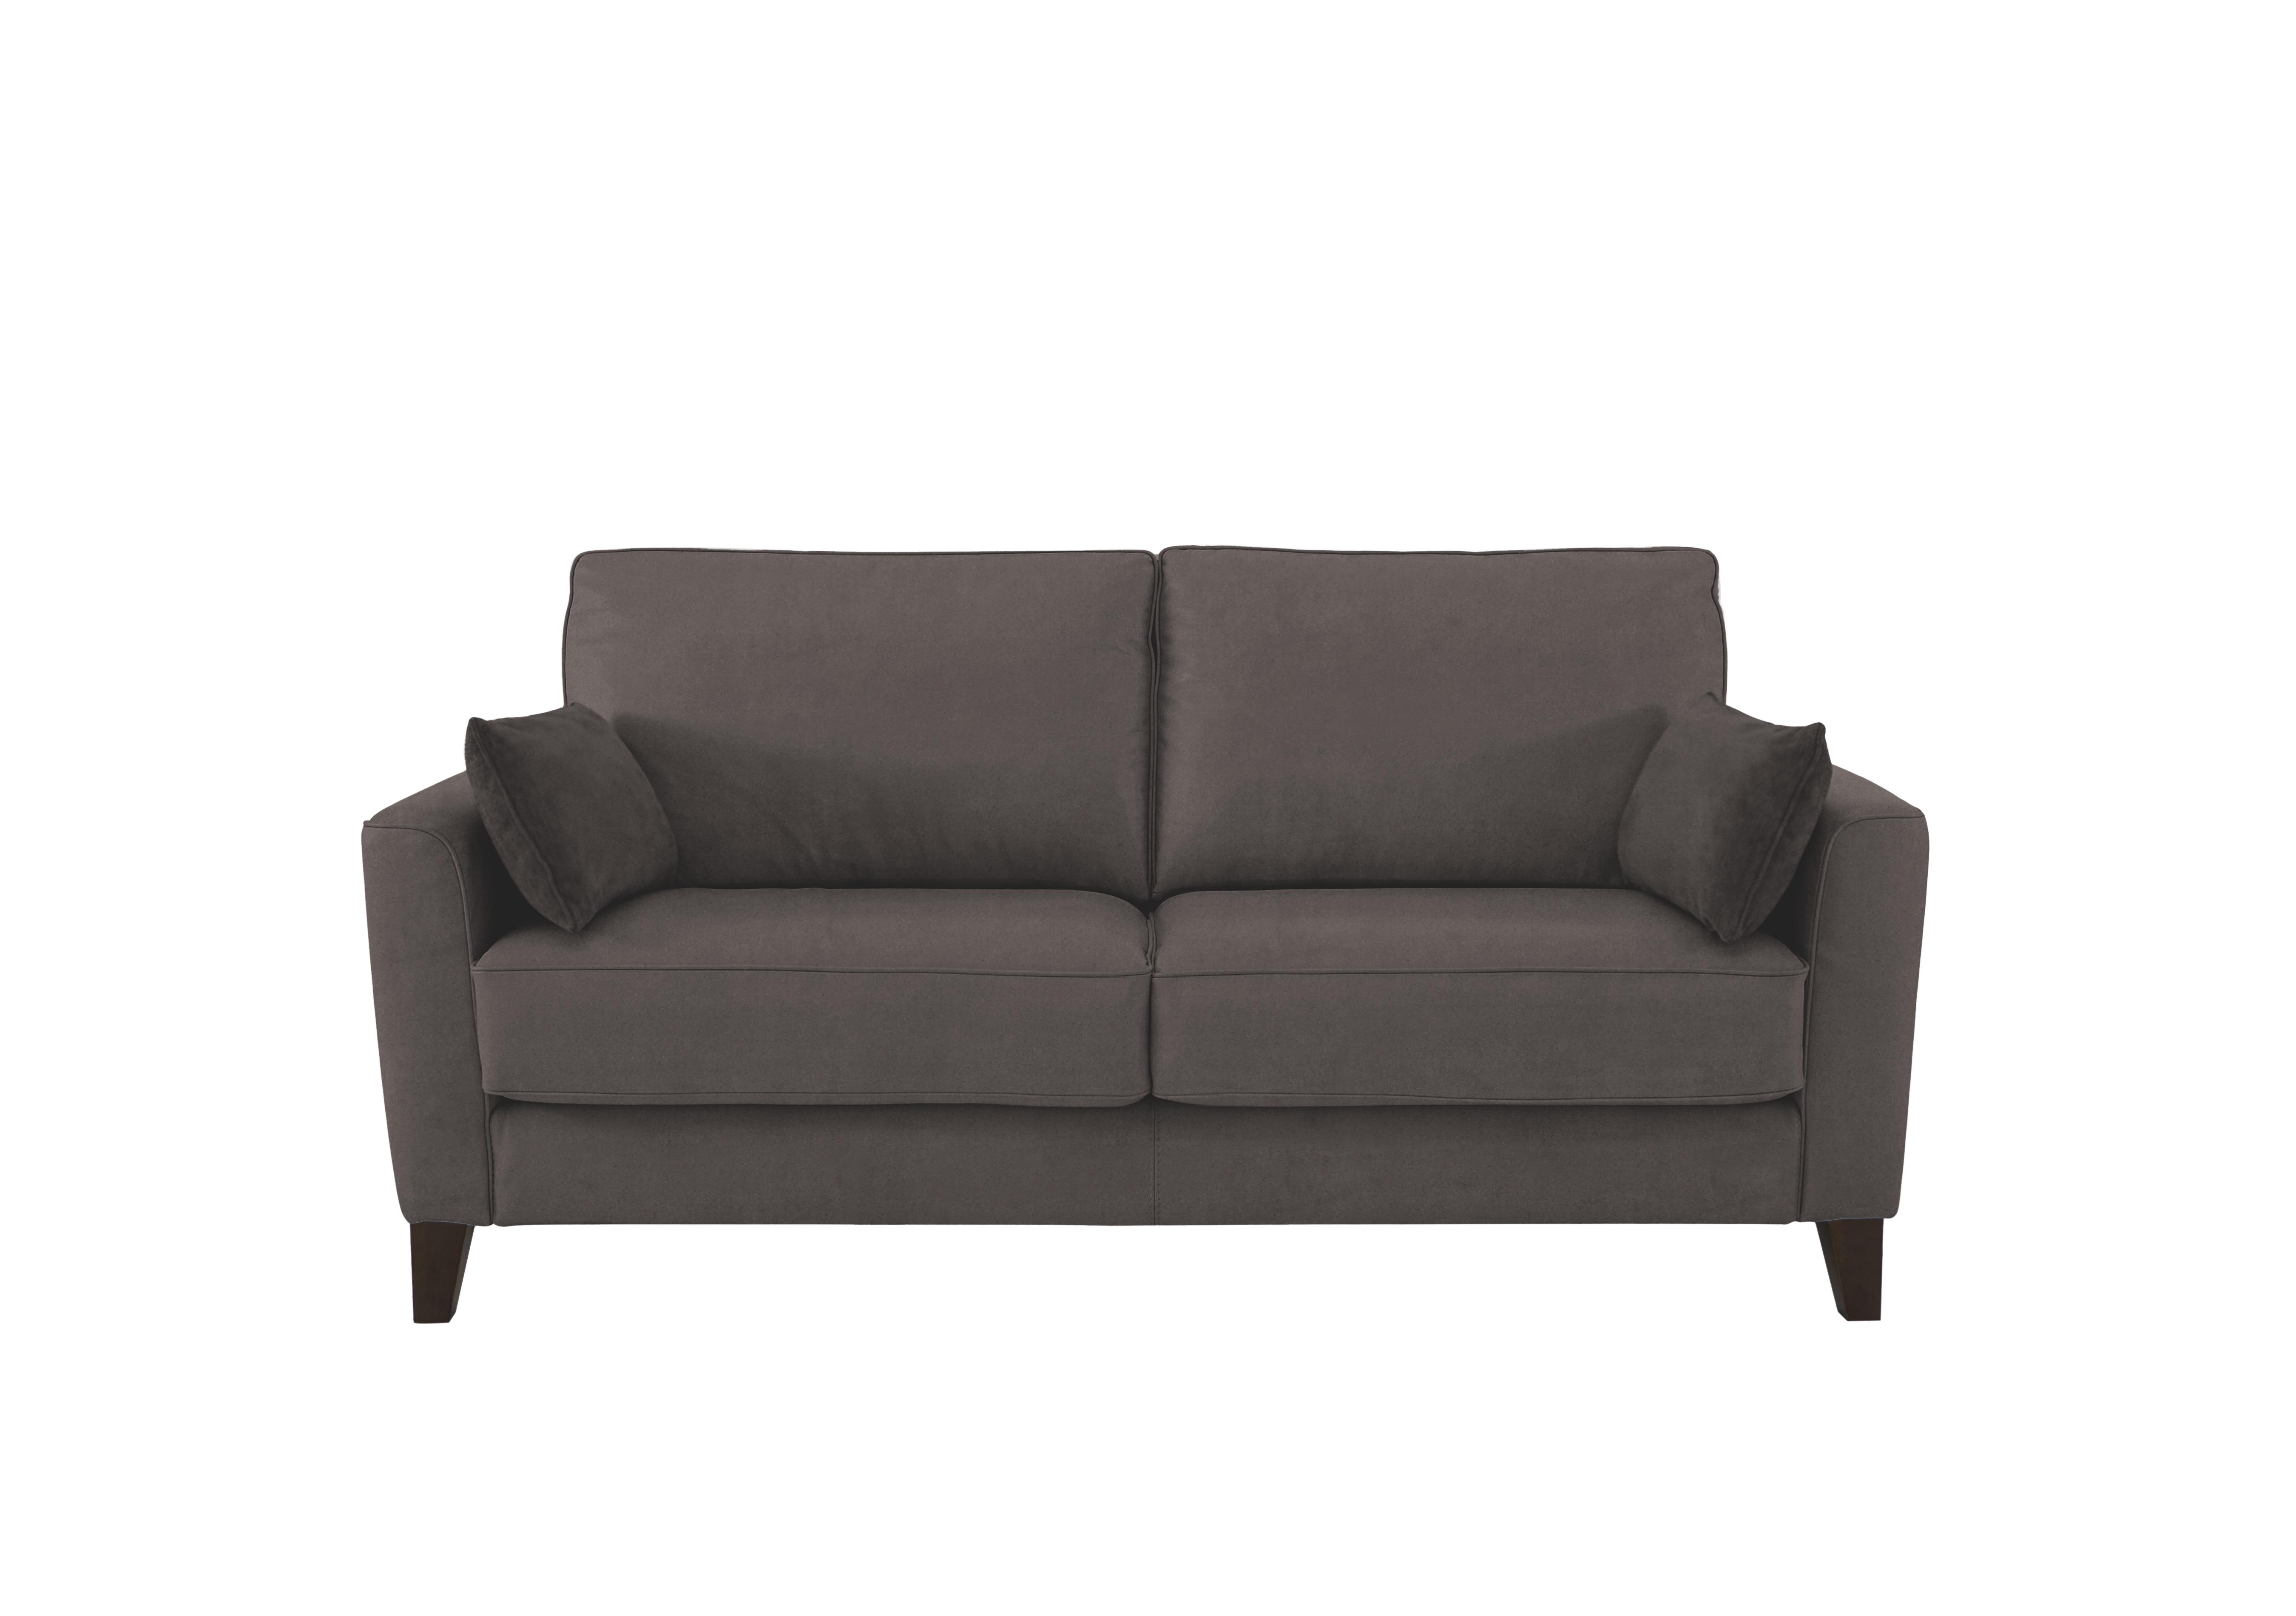 Brondby 2 Seater Fabric Sofa in Bfa-Bljr16 Grey on Furniture Village